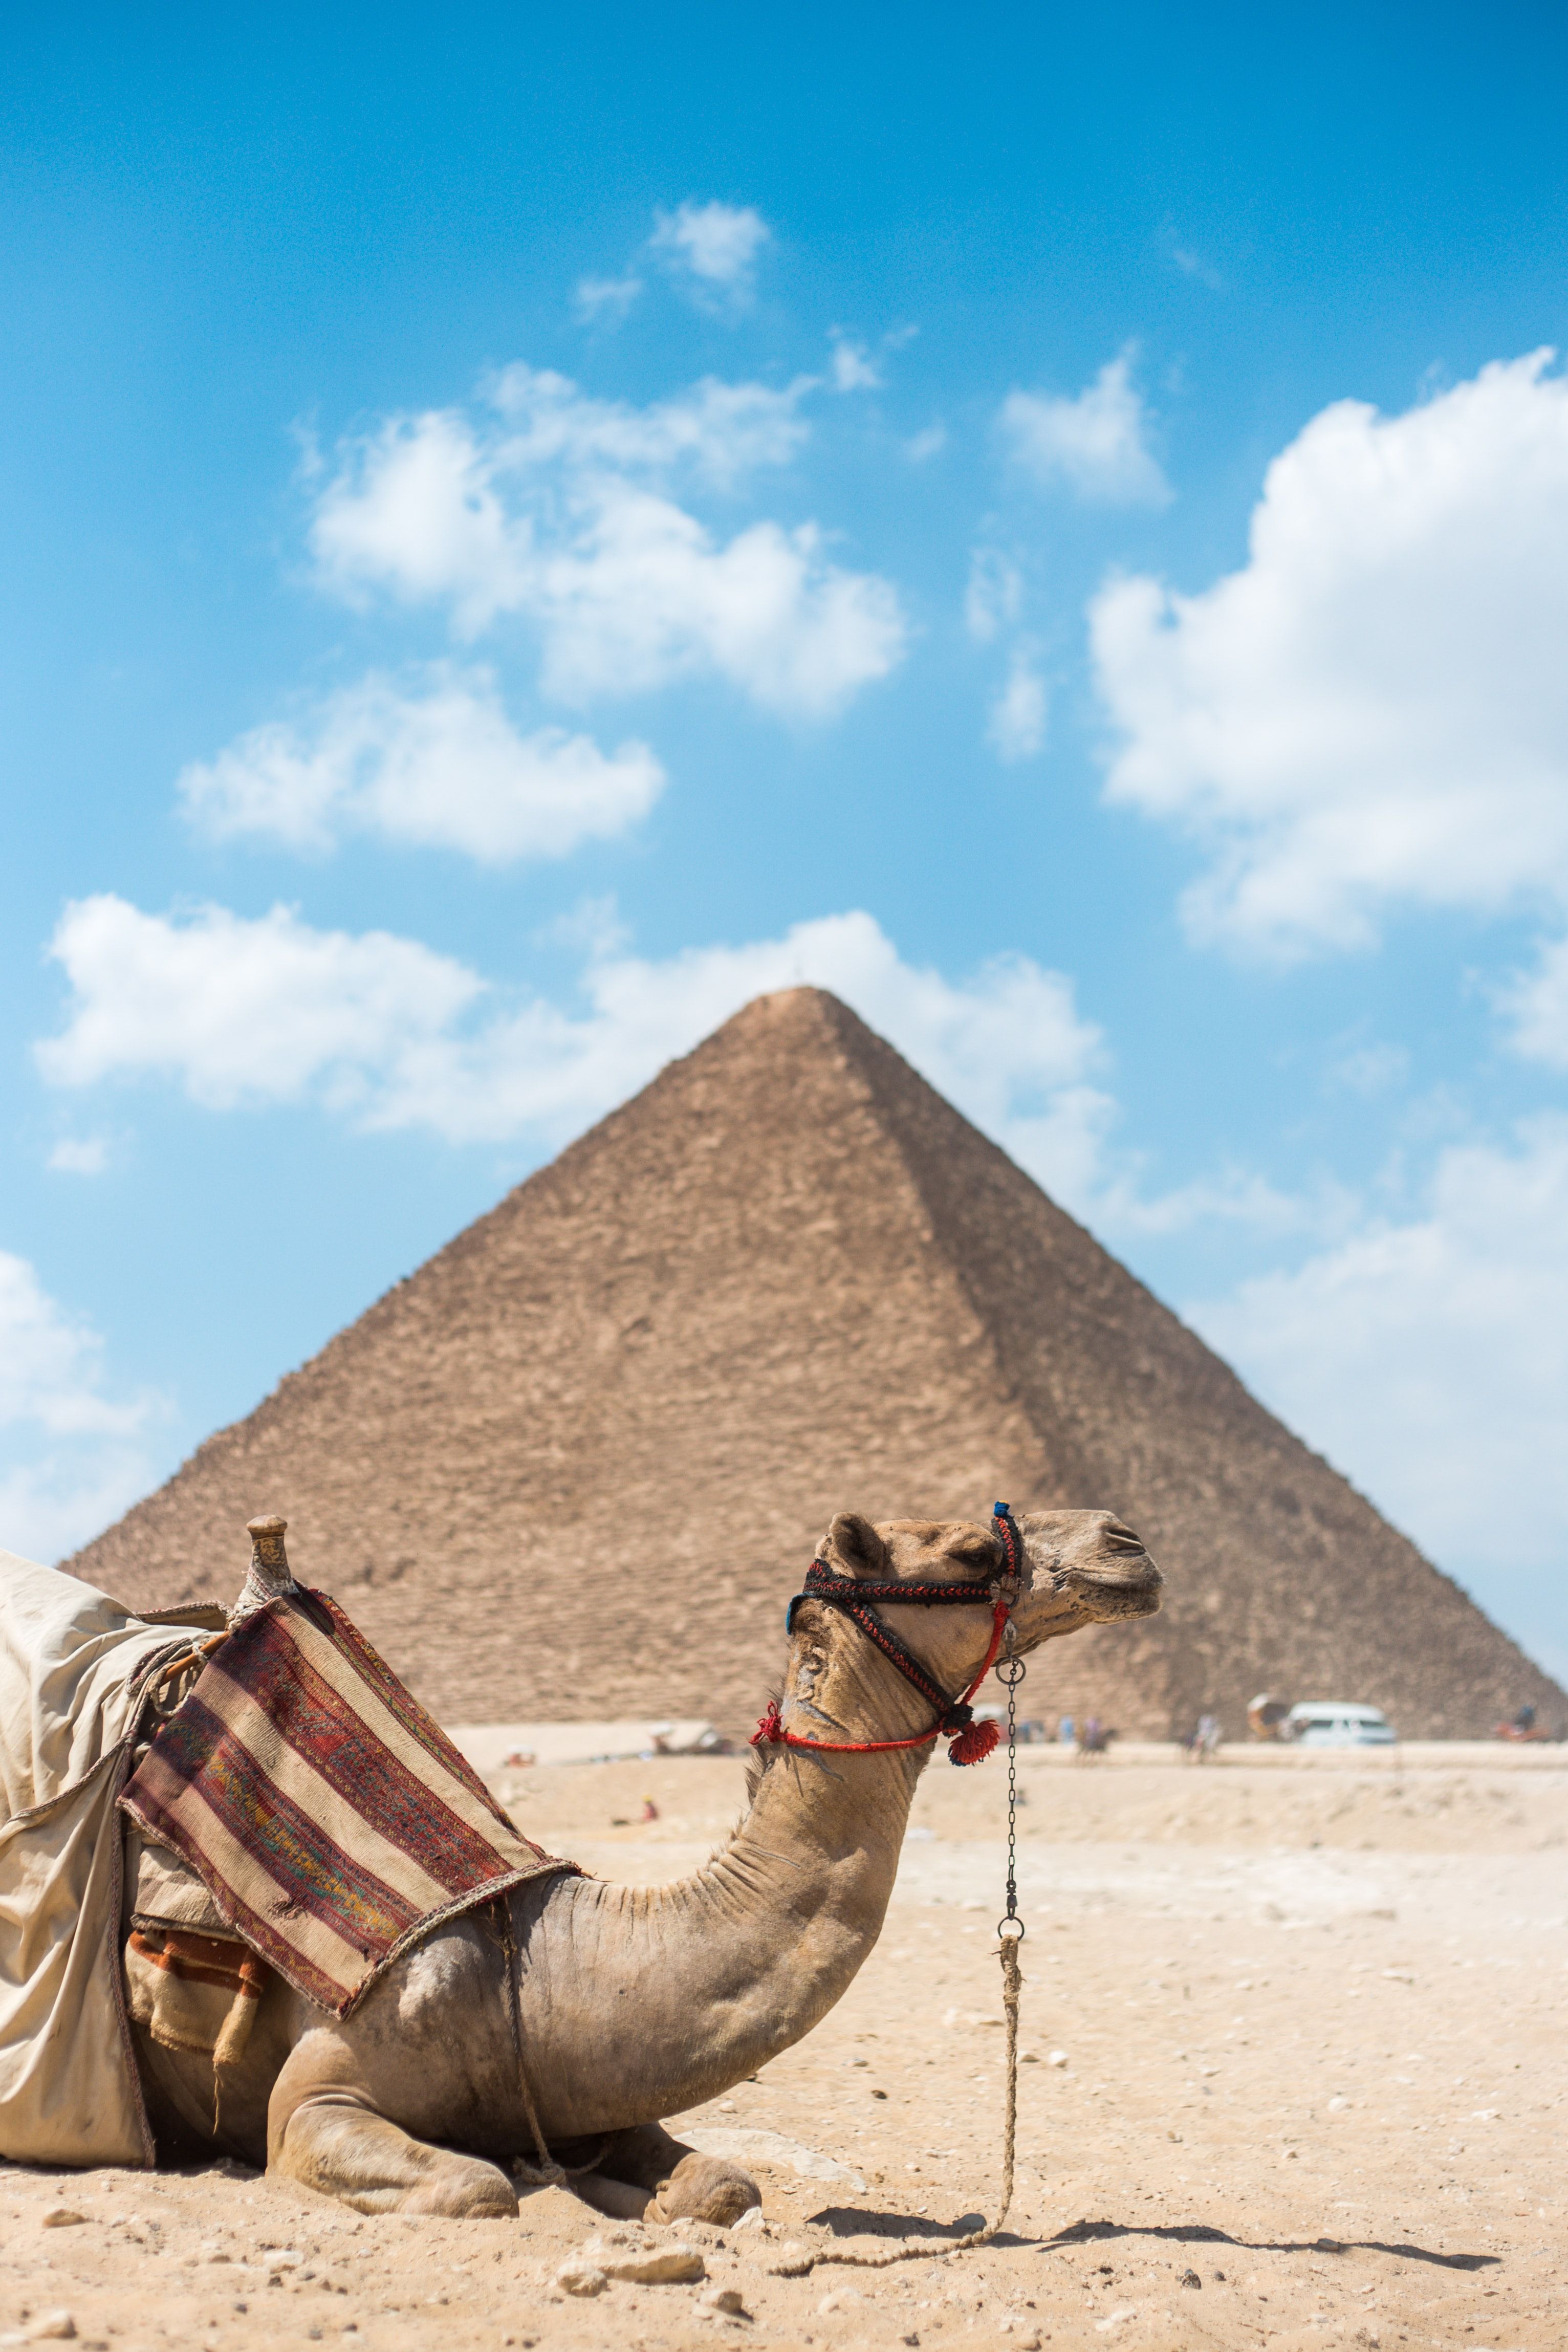 A camel near a pyramid